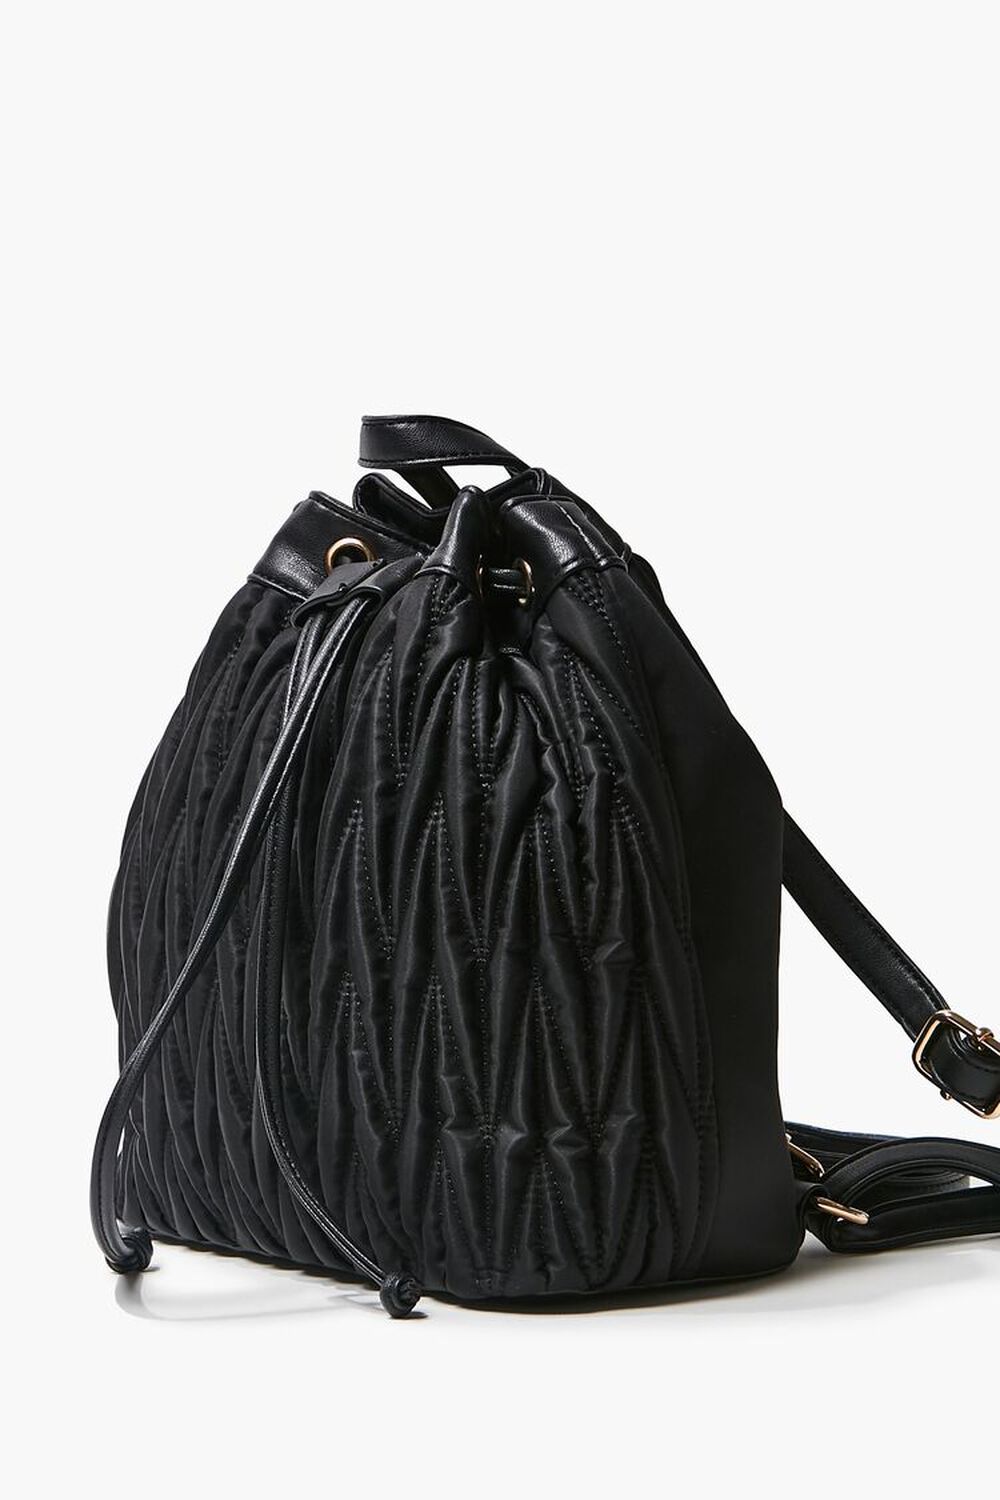 BLACK Chevron Drawstring Backpack, image 1